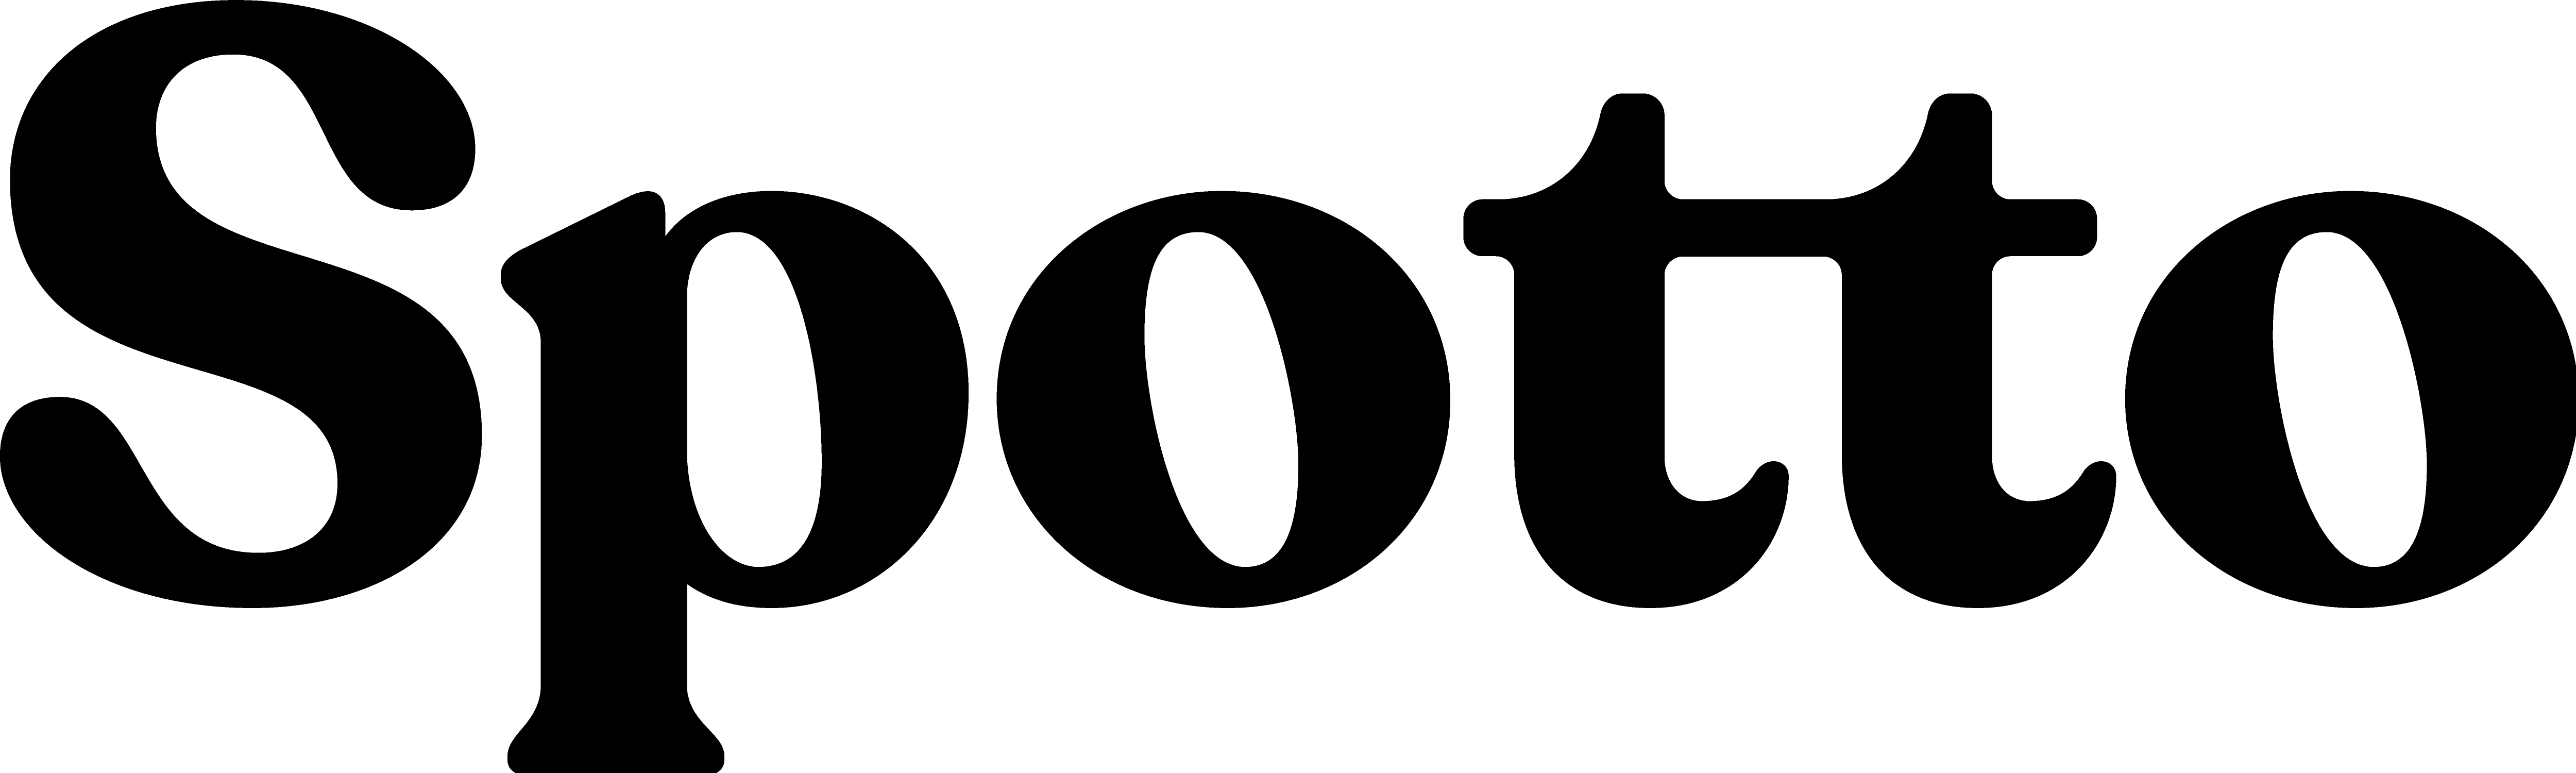 Spotto logo